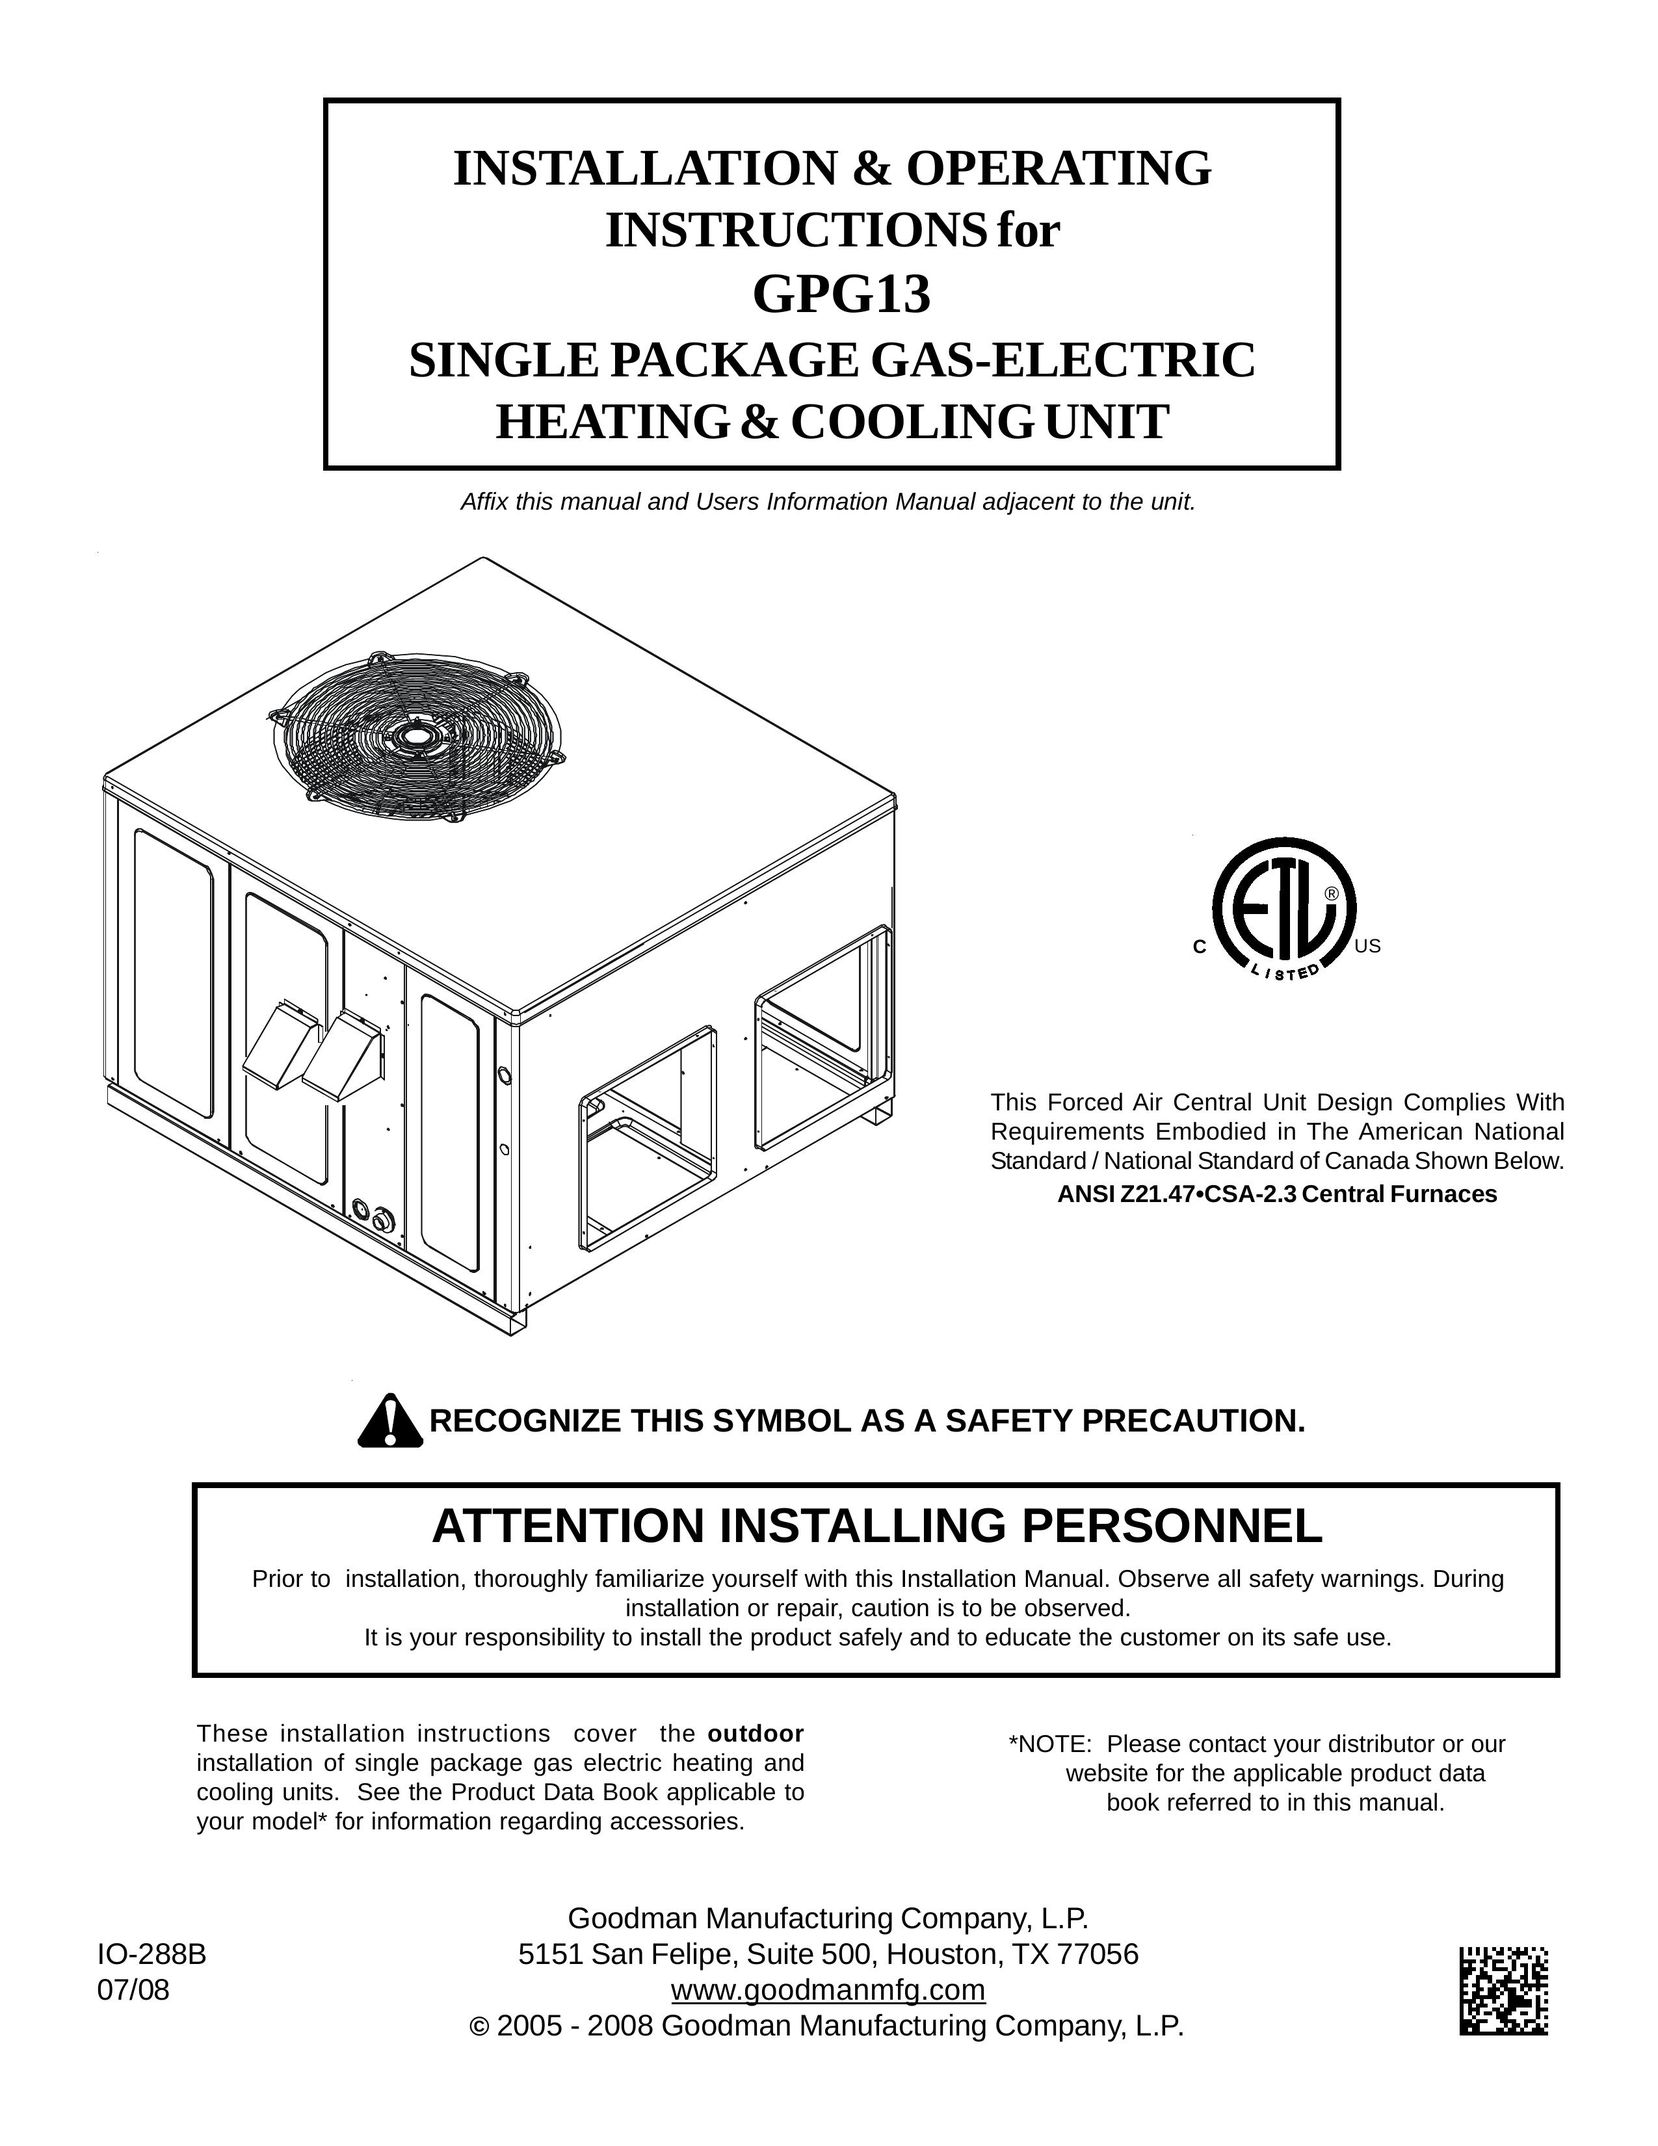 Goodman Mfg GPG13 Gas Heater User Manual